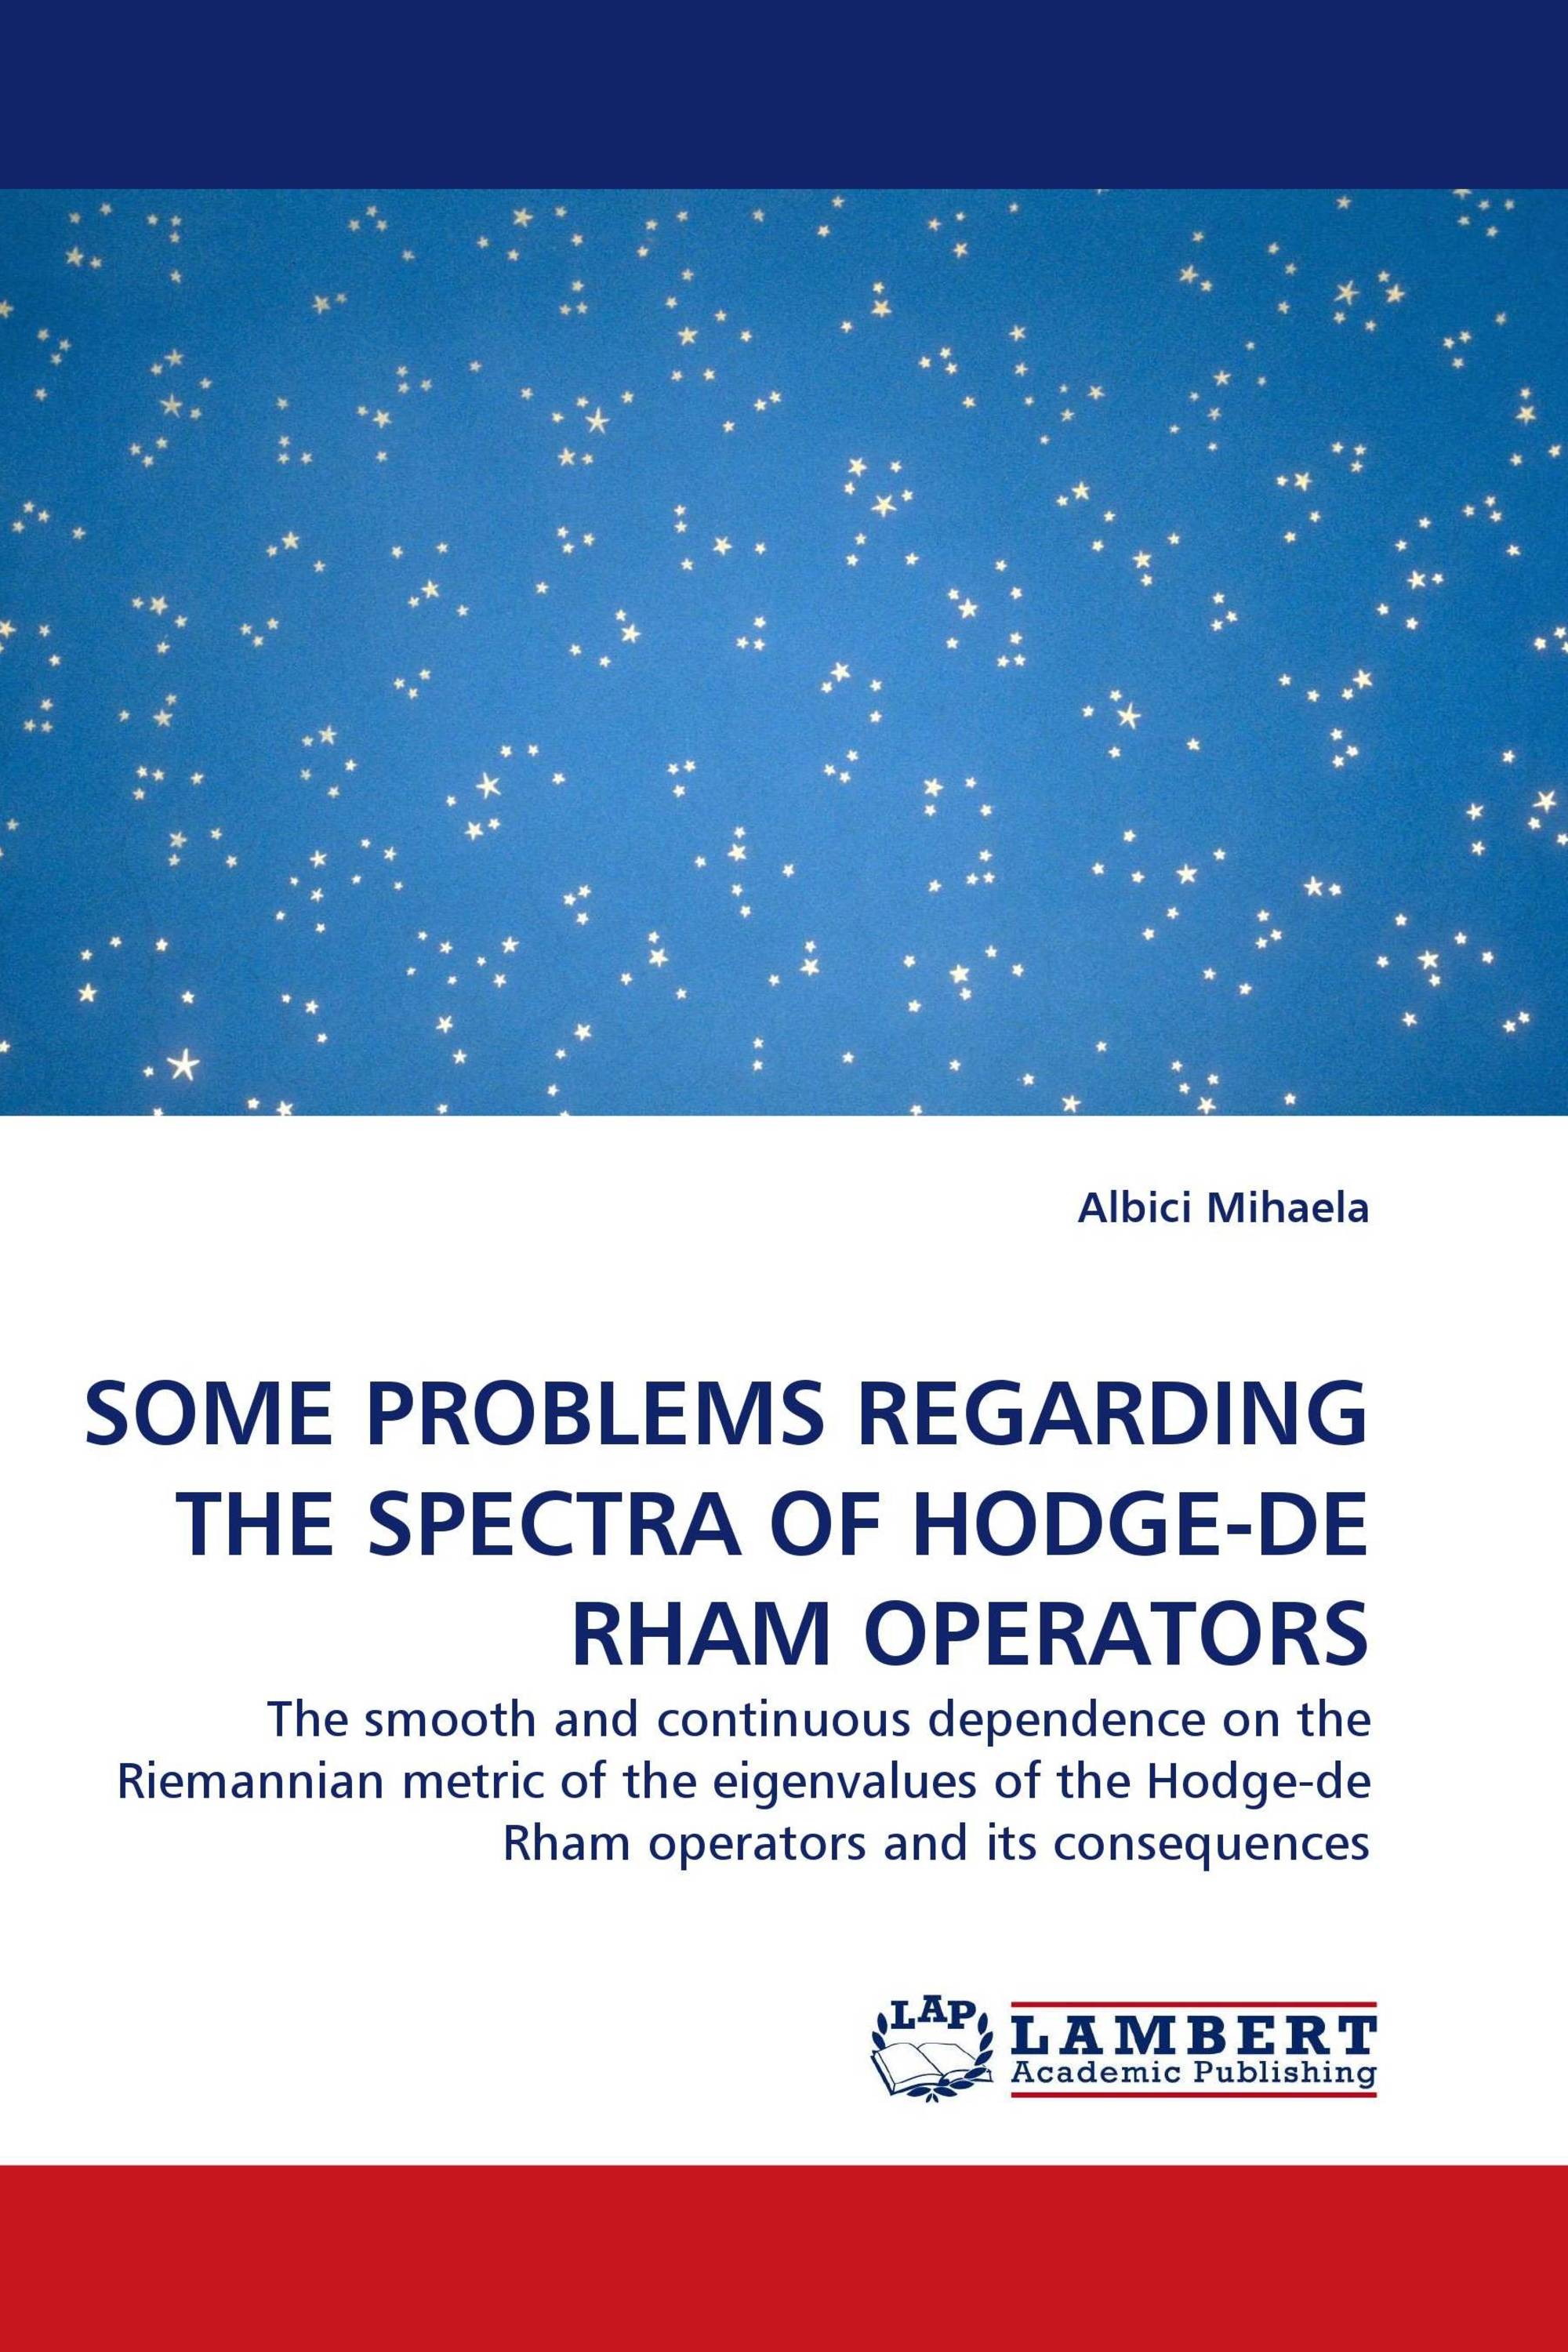 SOME PROBLEMS REGARDING THE SPECTRA OF HODGE-DE RHAM OPERATORS